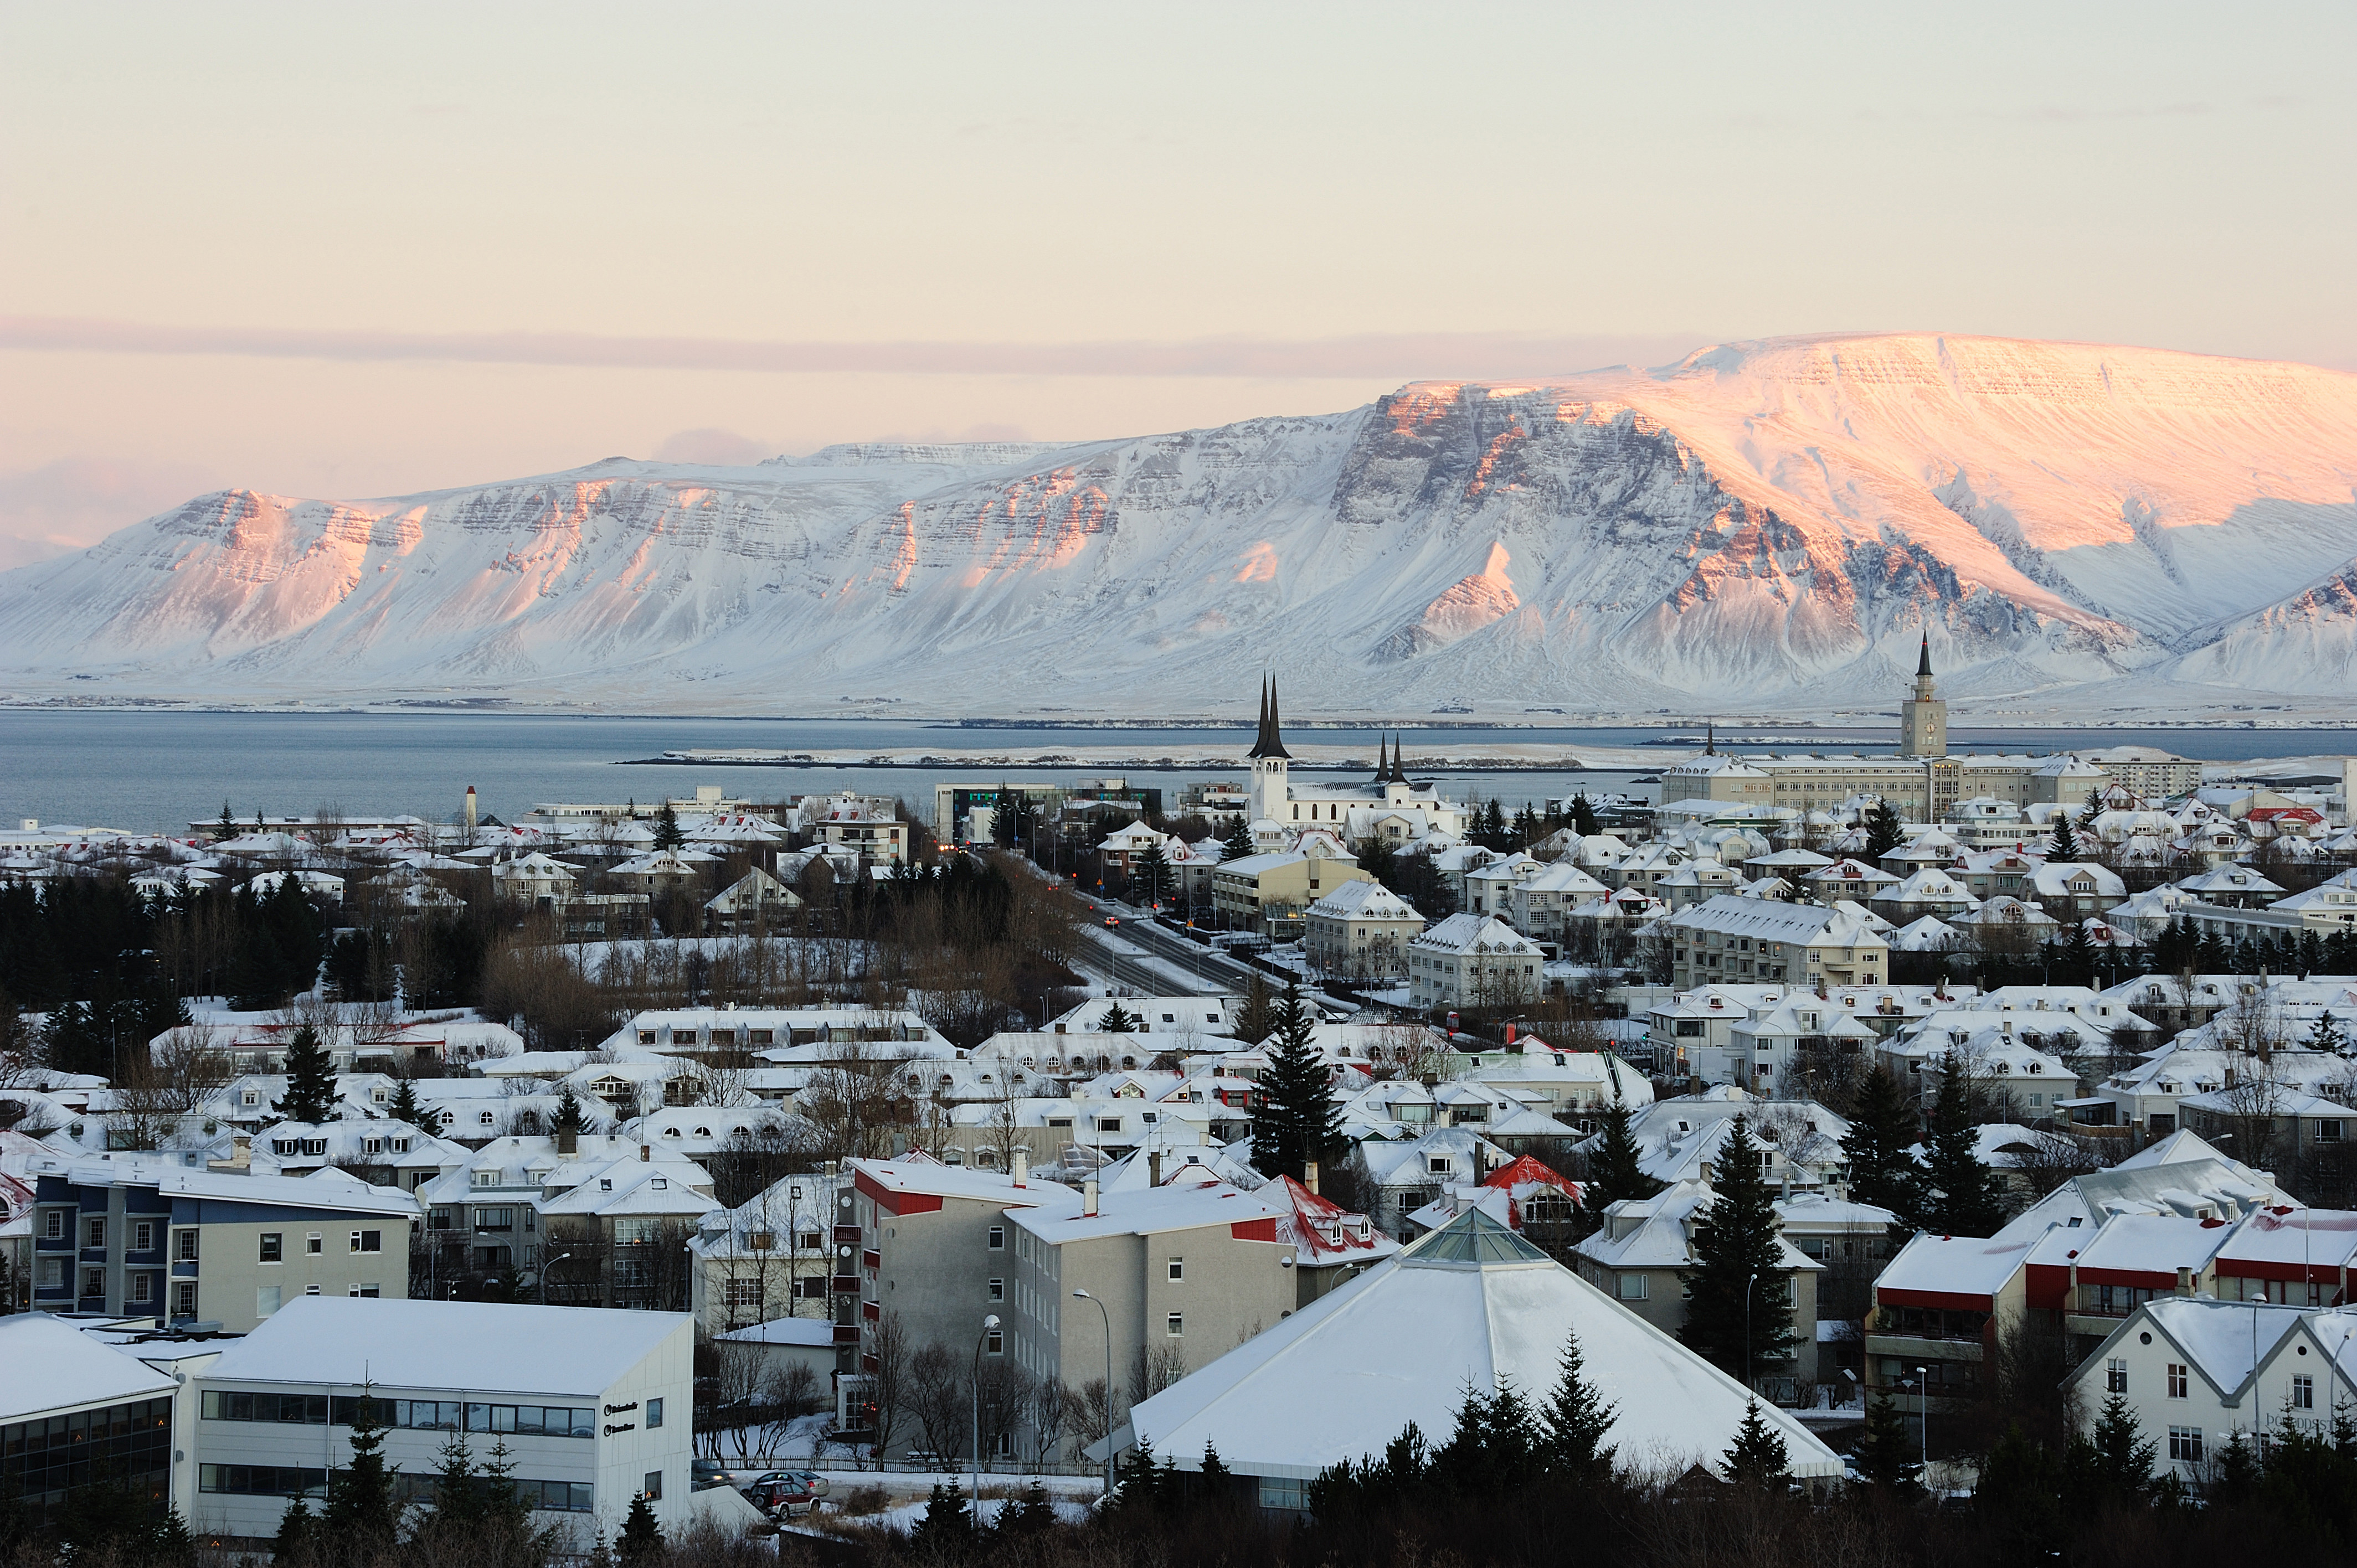 Resa till Reykjavik - Vy över Reykjavik stad med berg i bakgrunden i en solnedgång